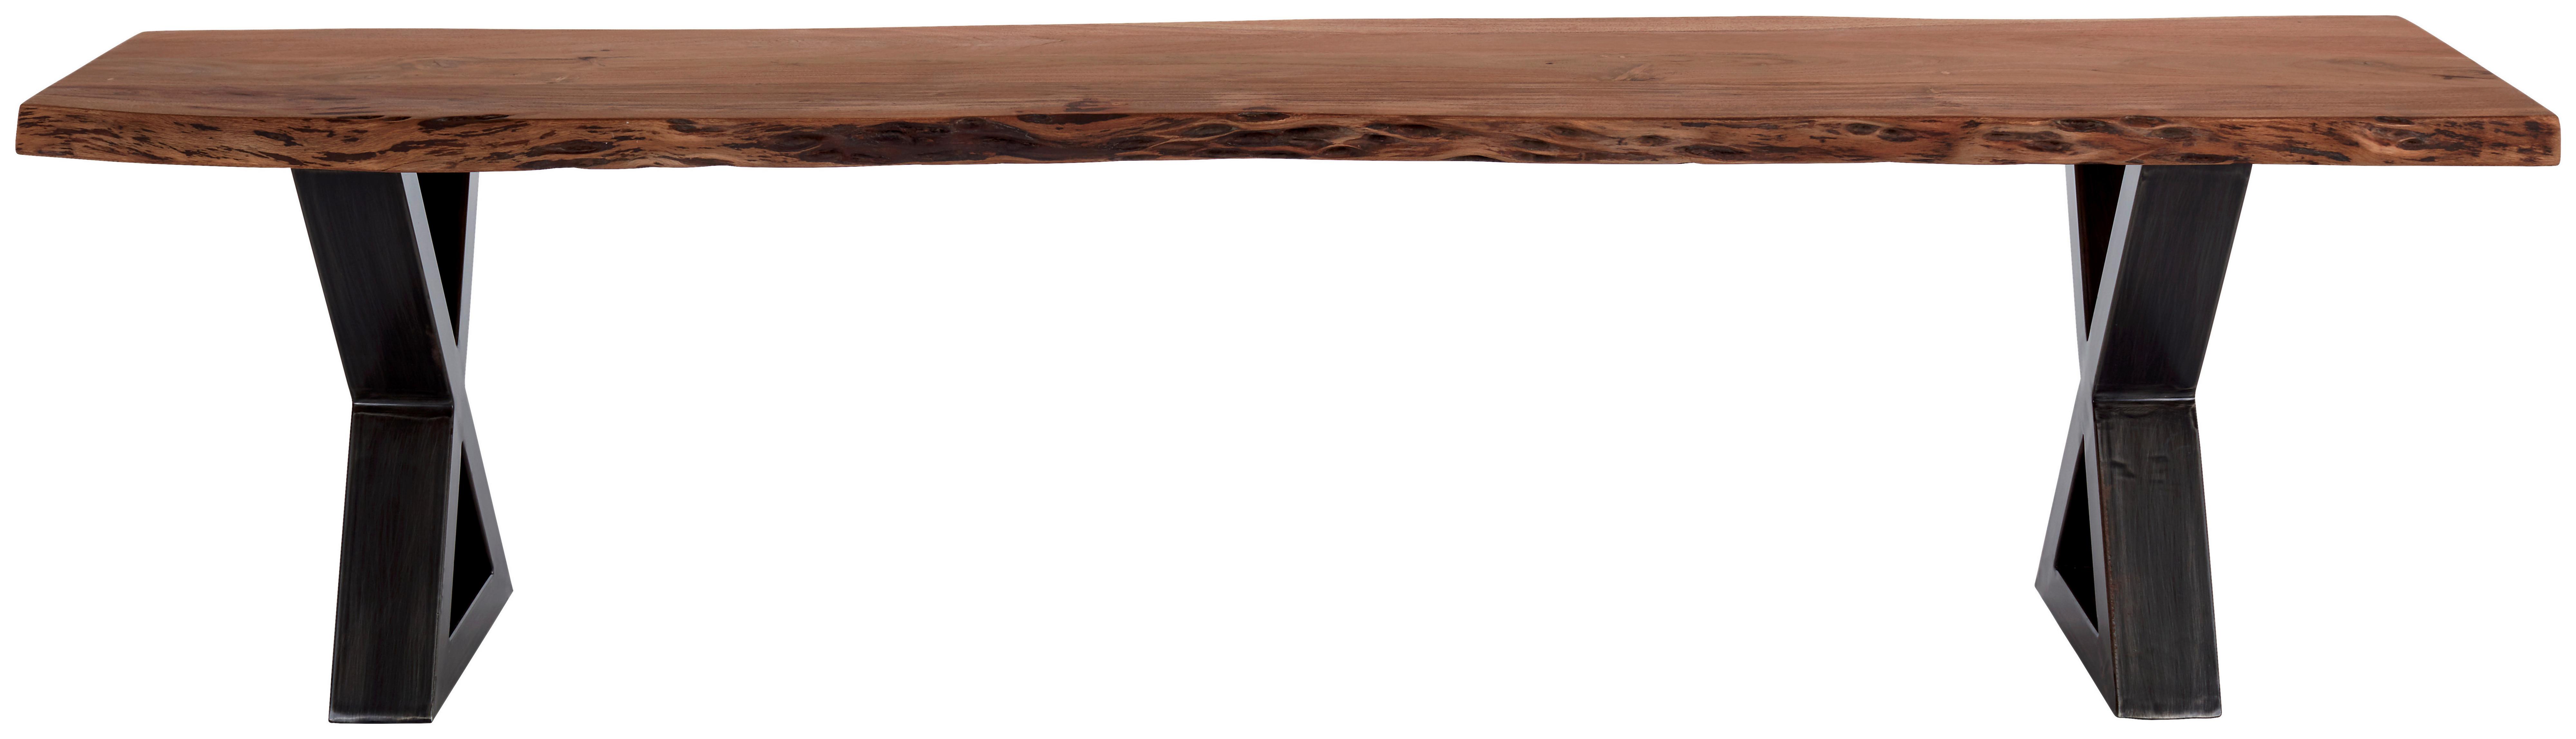 Sitzbank Holz Massiv Akazie / Schwarz Calabria B: 180 cm - Akaziefarben, MODERN, Holz (180/47/40cm)